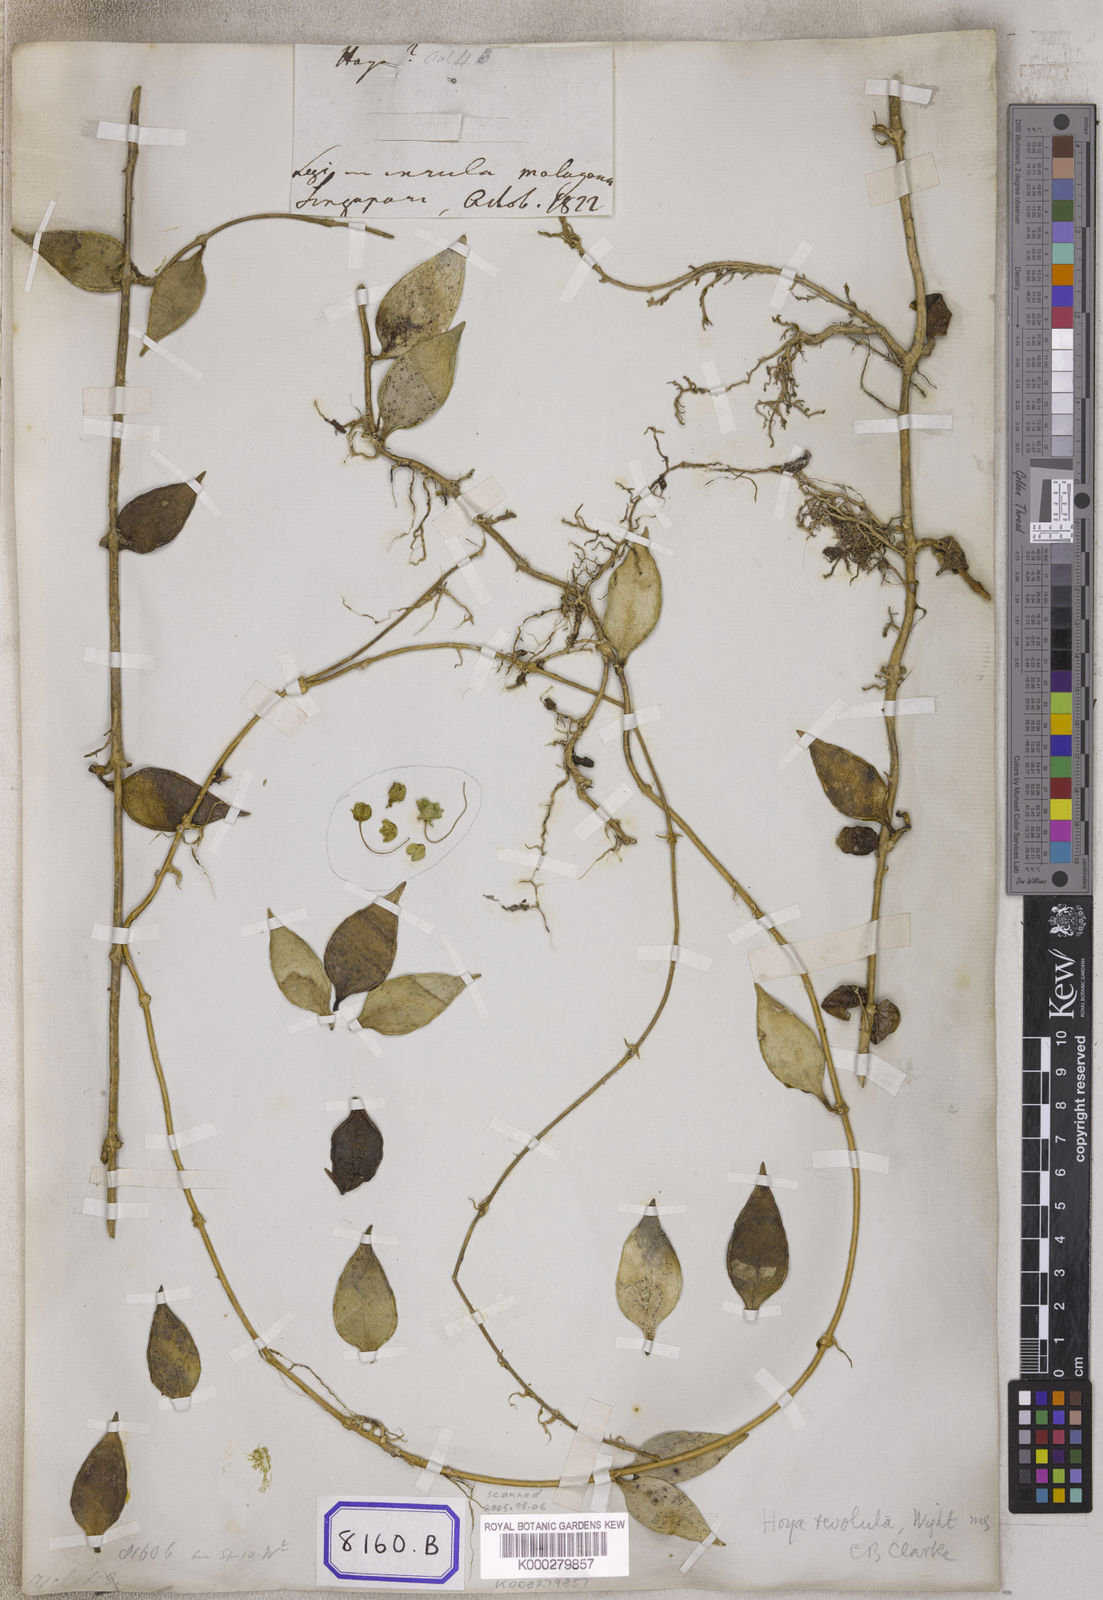 Full article: The taxonomy of Hoya micrantha and Hoya revoluta